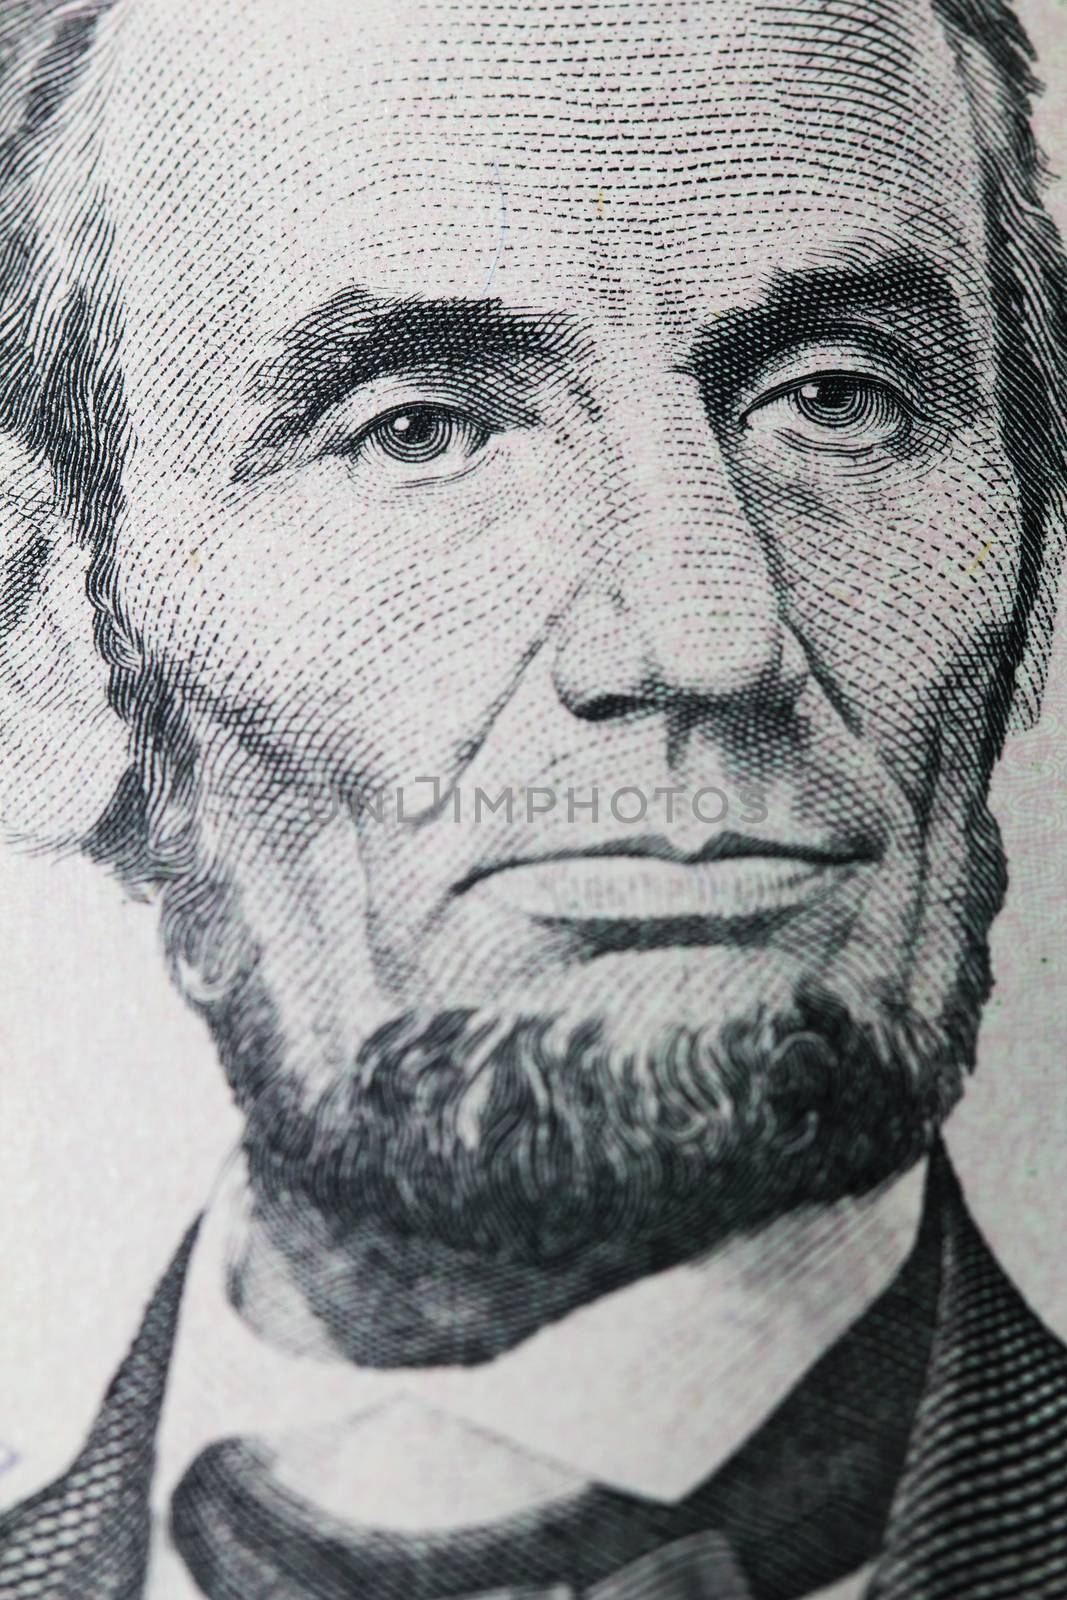 Lincoln portrait on dollar close up macro